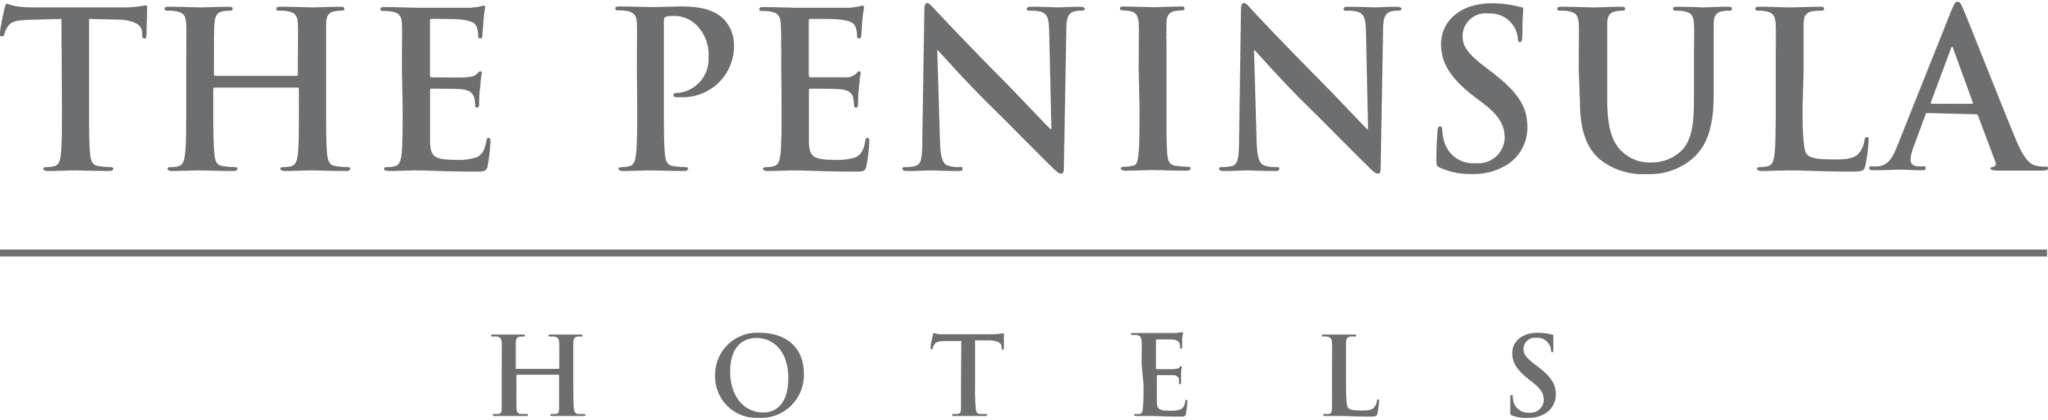 Logotipo do The Peninsula Hotels